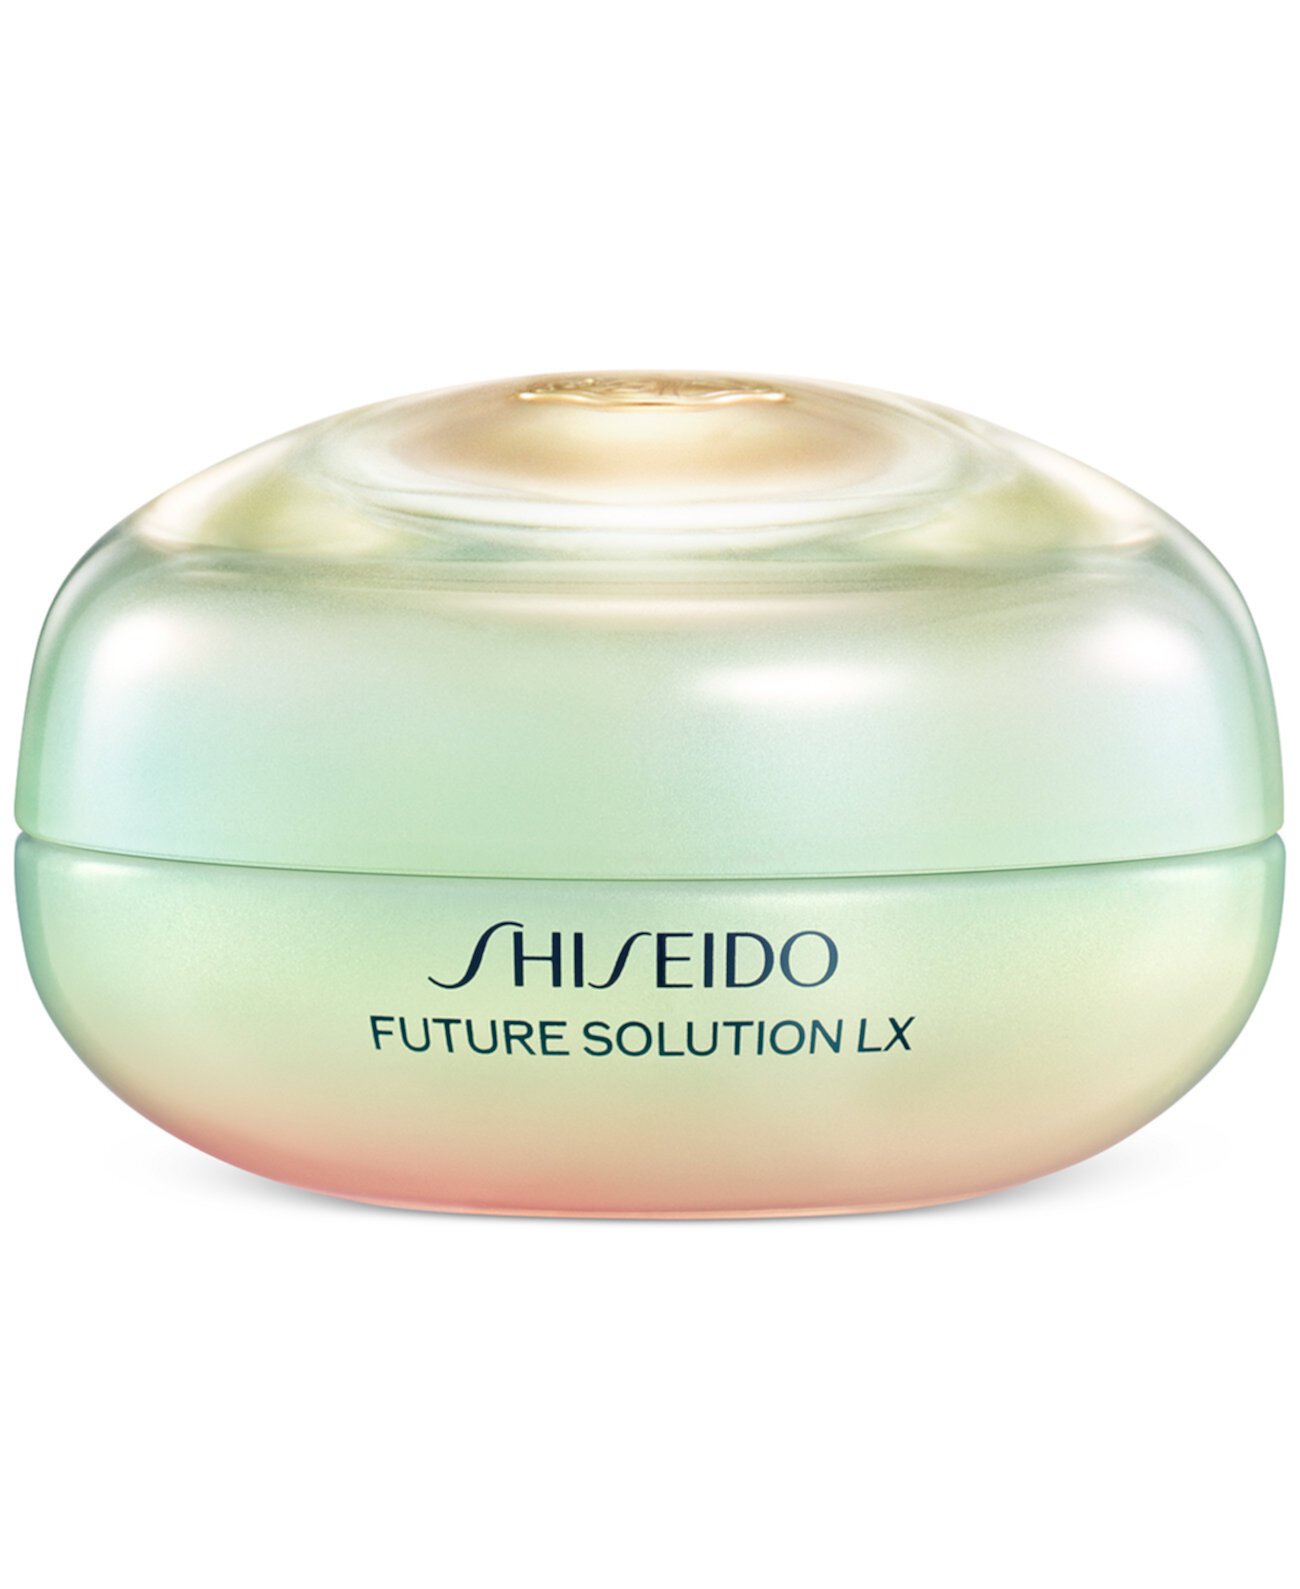 Shiseido Future solution LX. Shiseido Future solution. Shiseido обогащенная очищающая пенка Future solution LX отзывы.